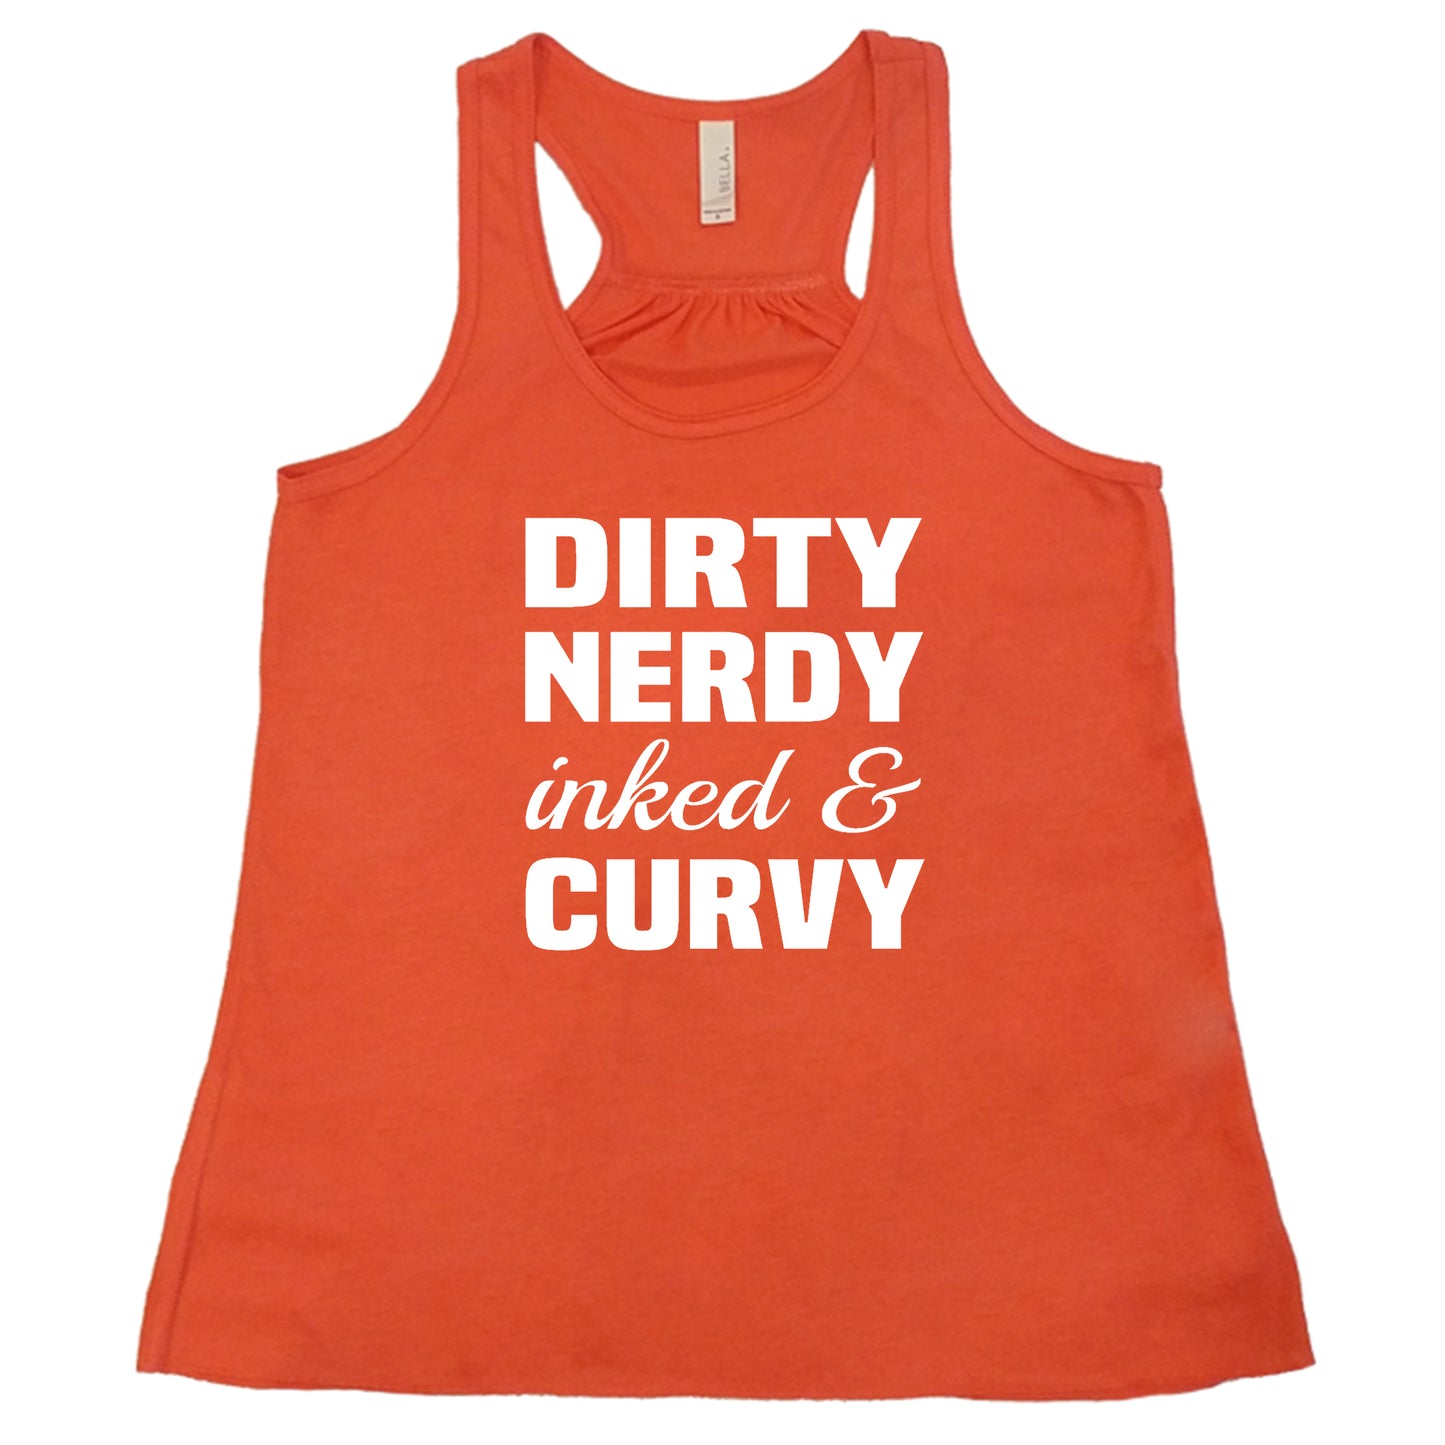 Dirty, Nerdy, Inked & Curvy Shirt